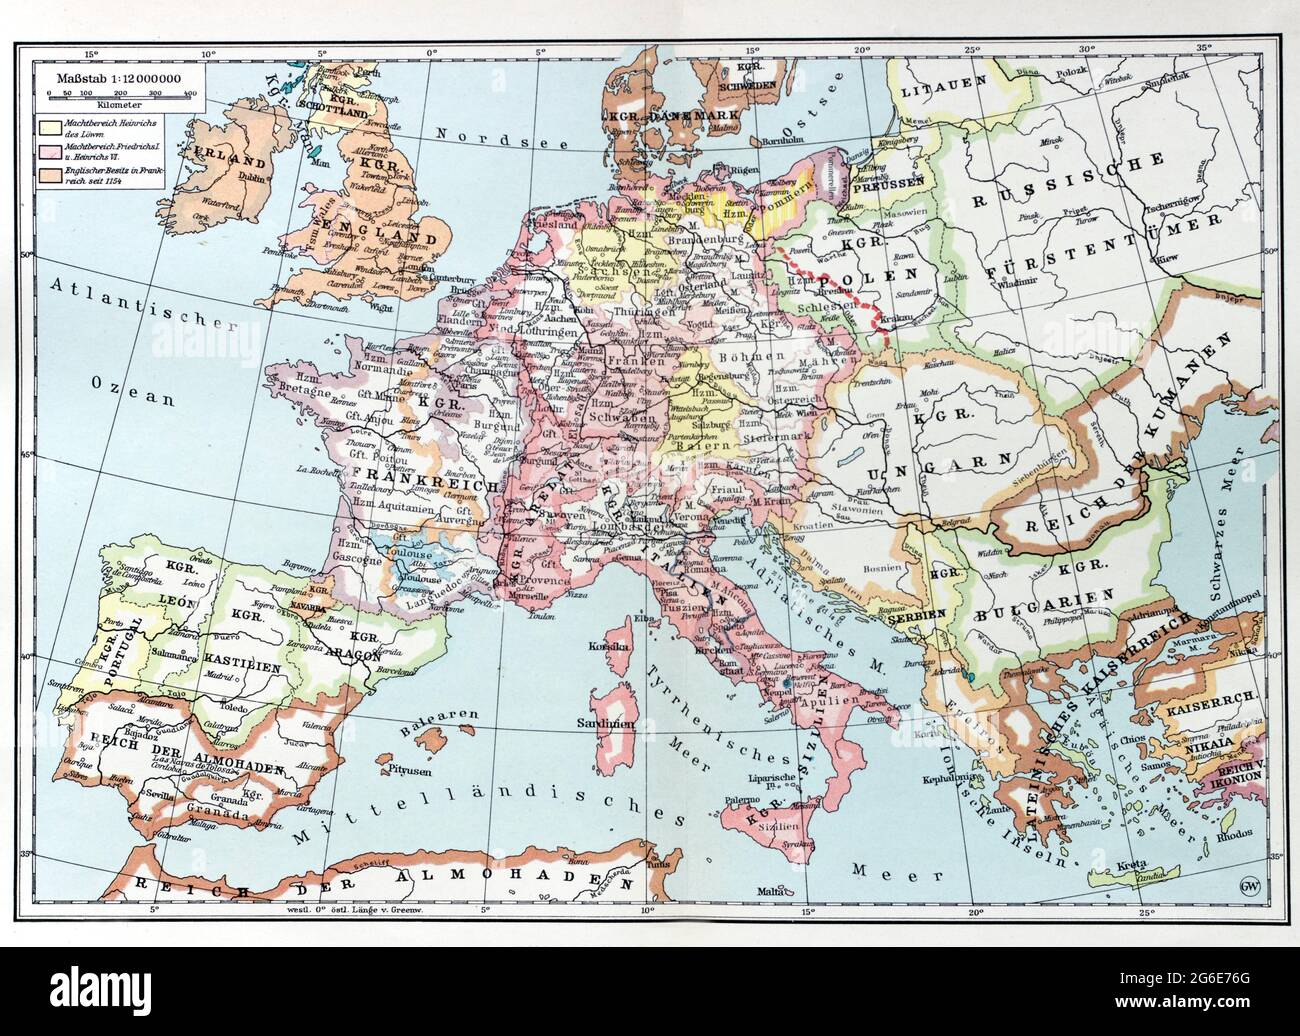 Alte Europakarte um das Jahr 1200 Stockfoto